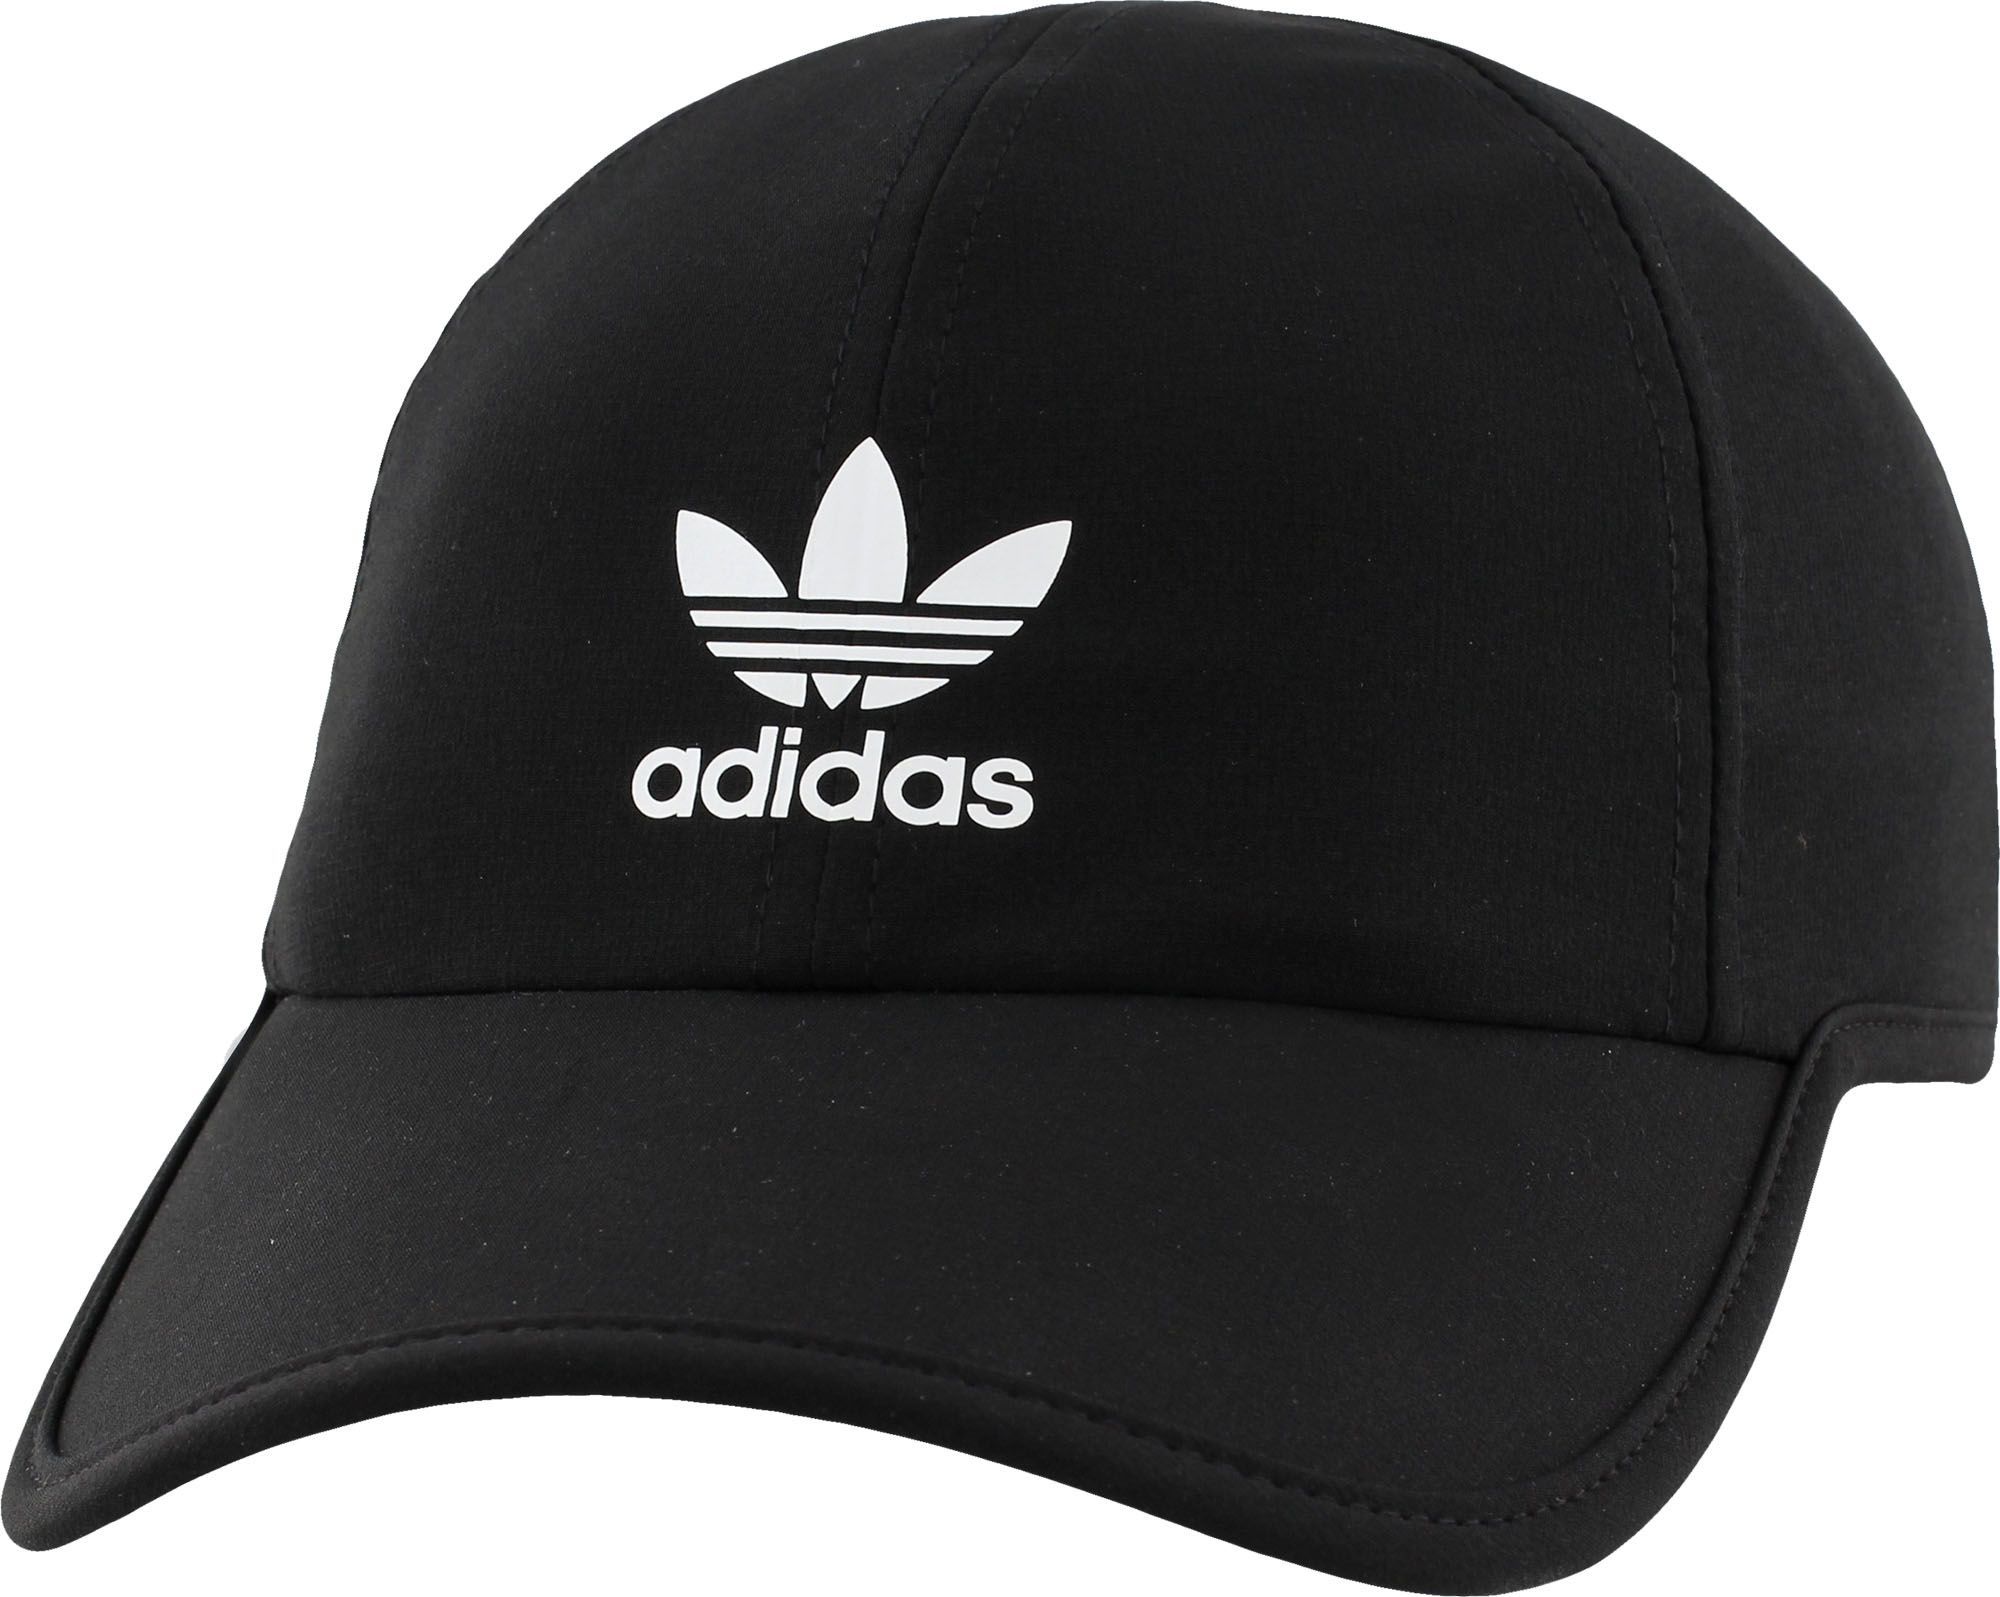 adidas Originals Women's Trainer II Hat, Size: One size, Black | Dick's Sporting Goods